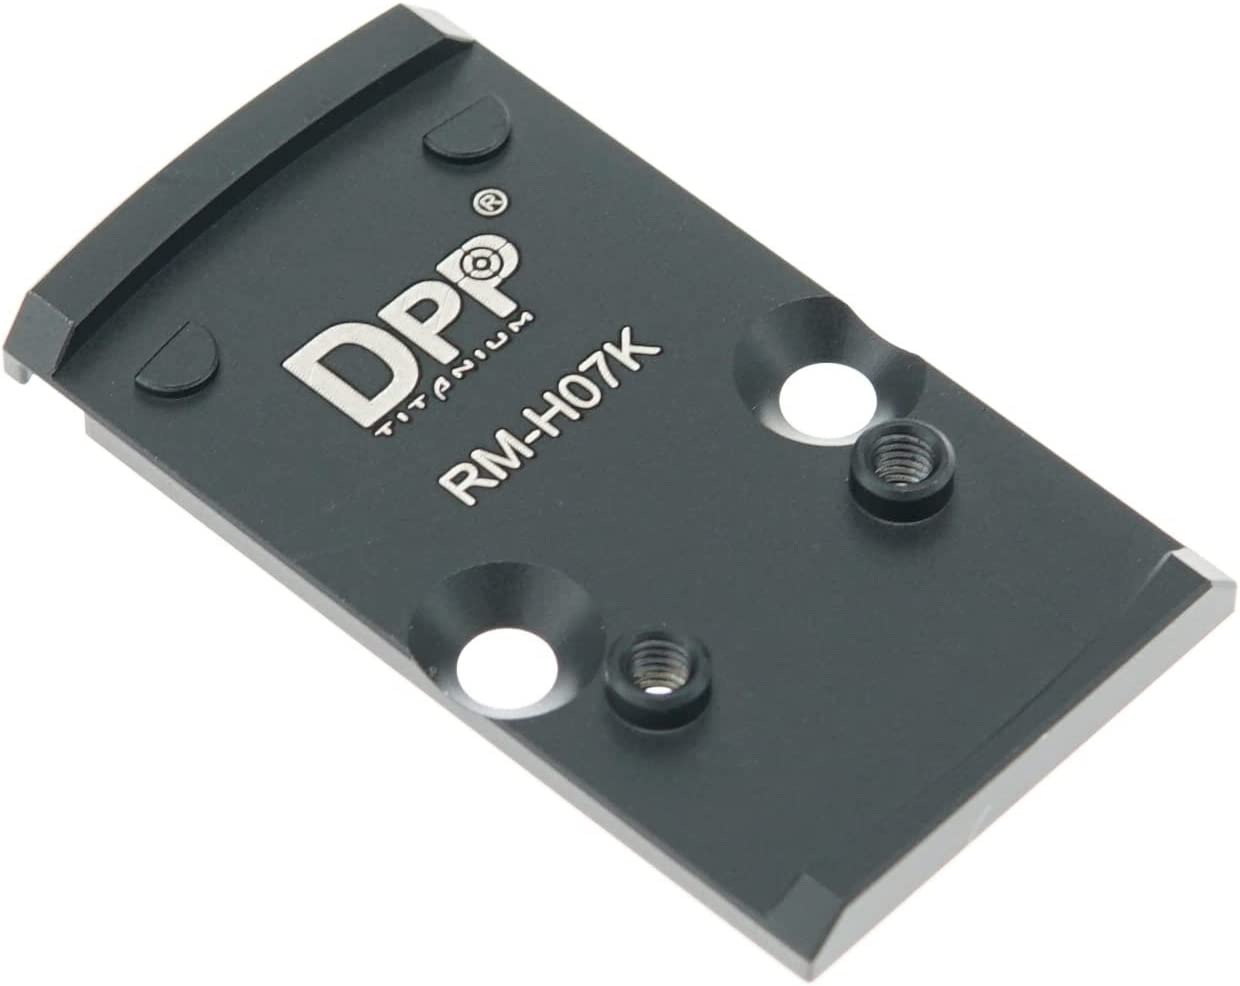 RMR to K Series Adapter Plate - Convert RMR to Holosun 407K/507K/EPS/EPS Carry - Titanium - DPP